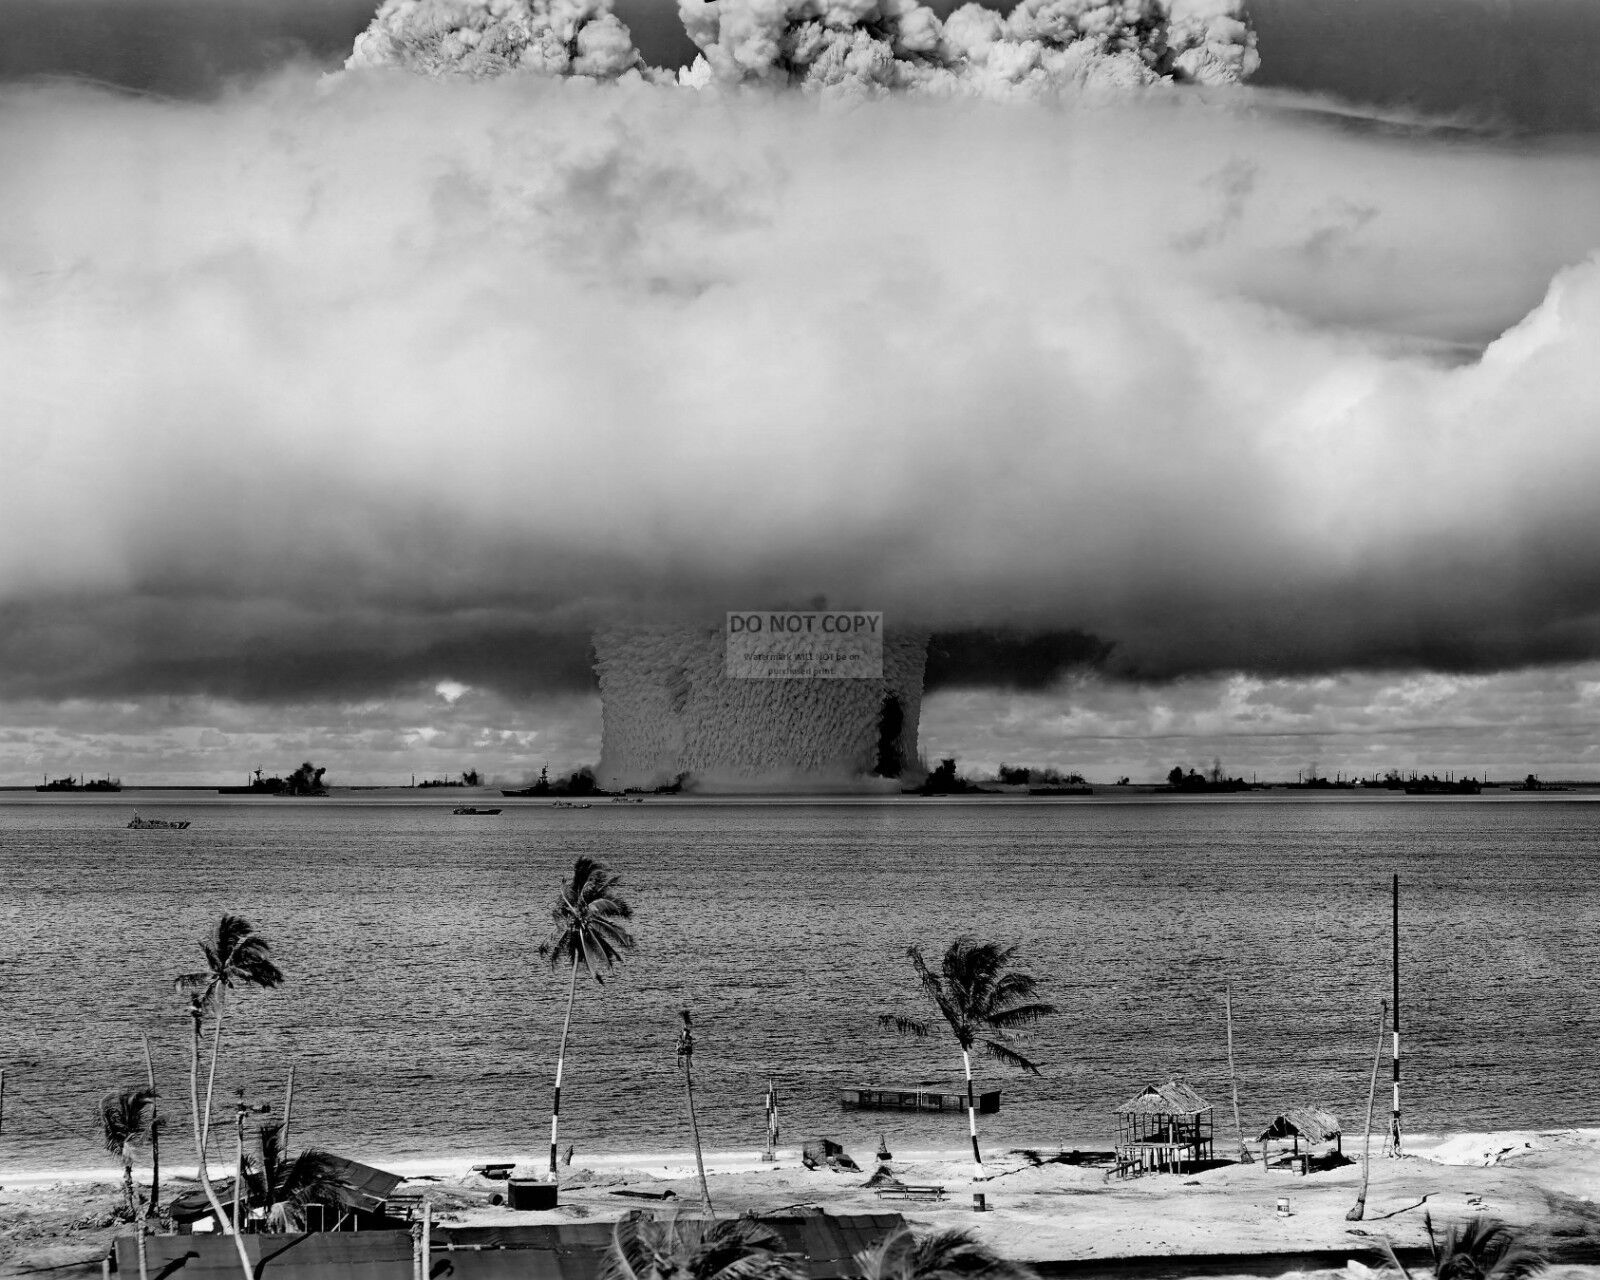 1946 BAKER EXPLOSION NUCLEAR WEAPON TEST AT BIKINI ATOLL - 8X10 PHOTO (BB-654)